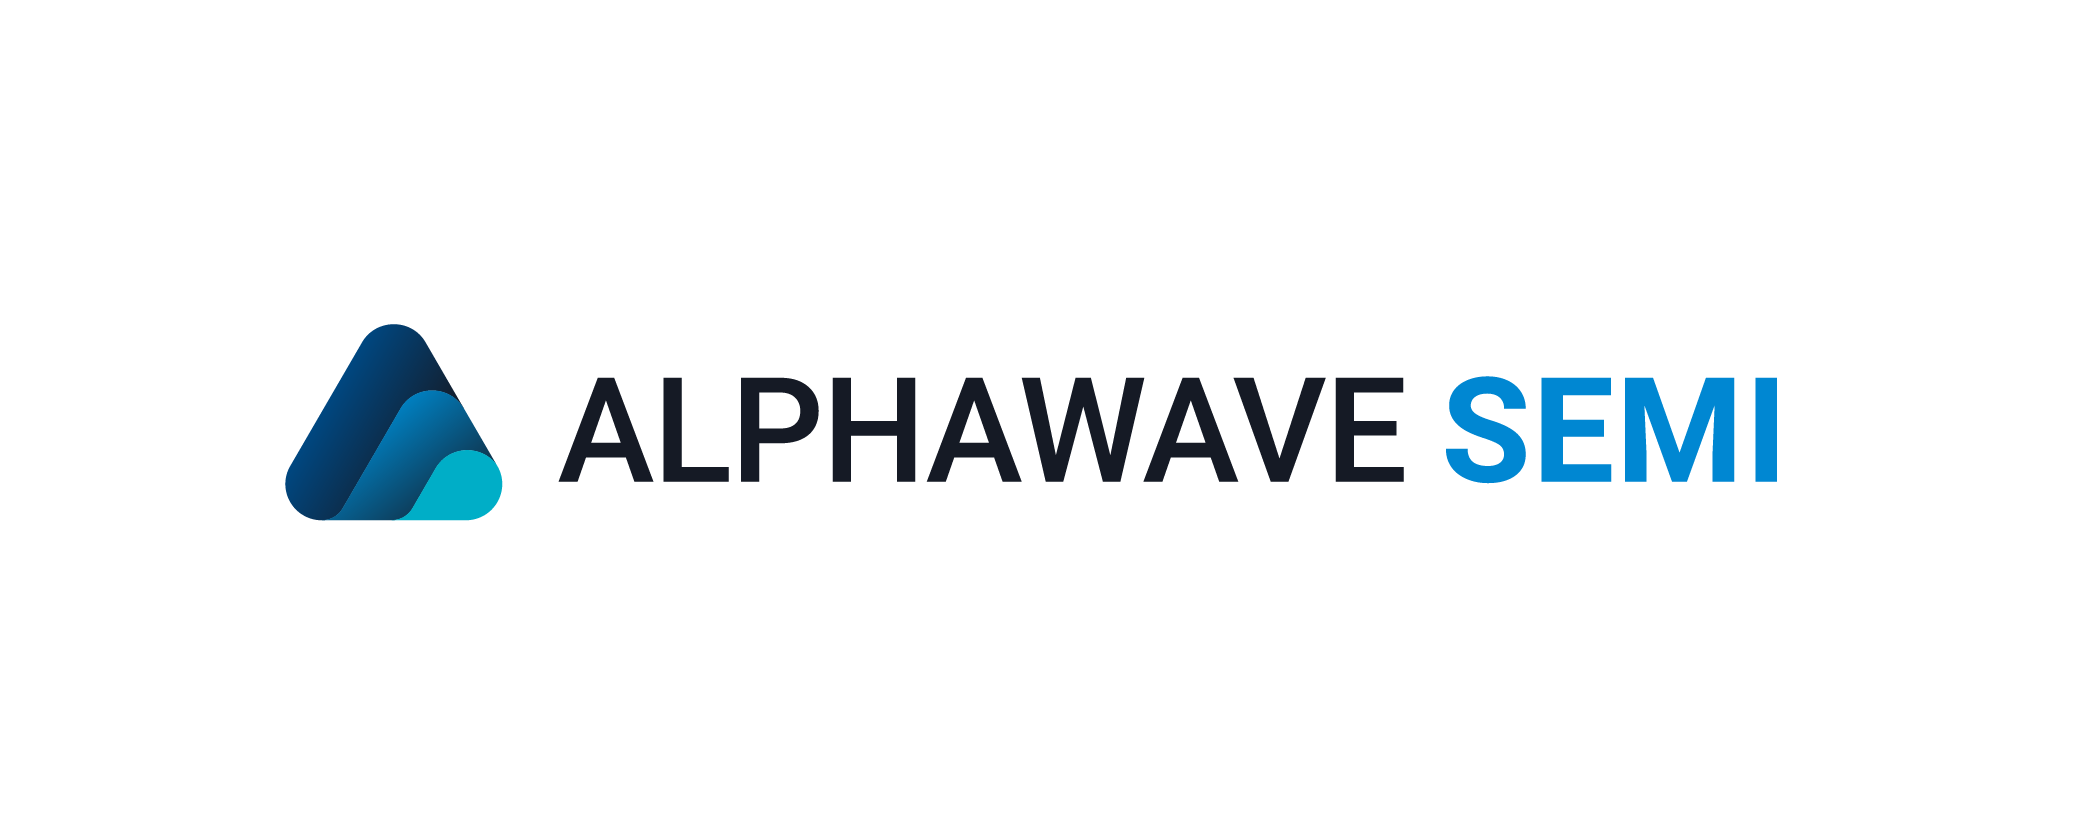 Alphawave Semi